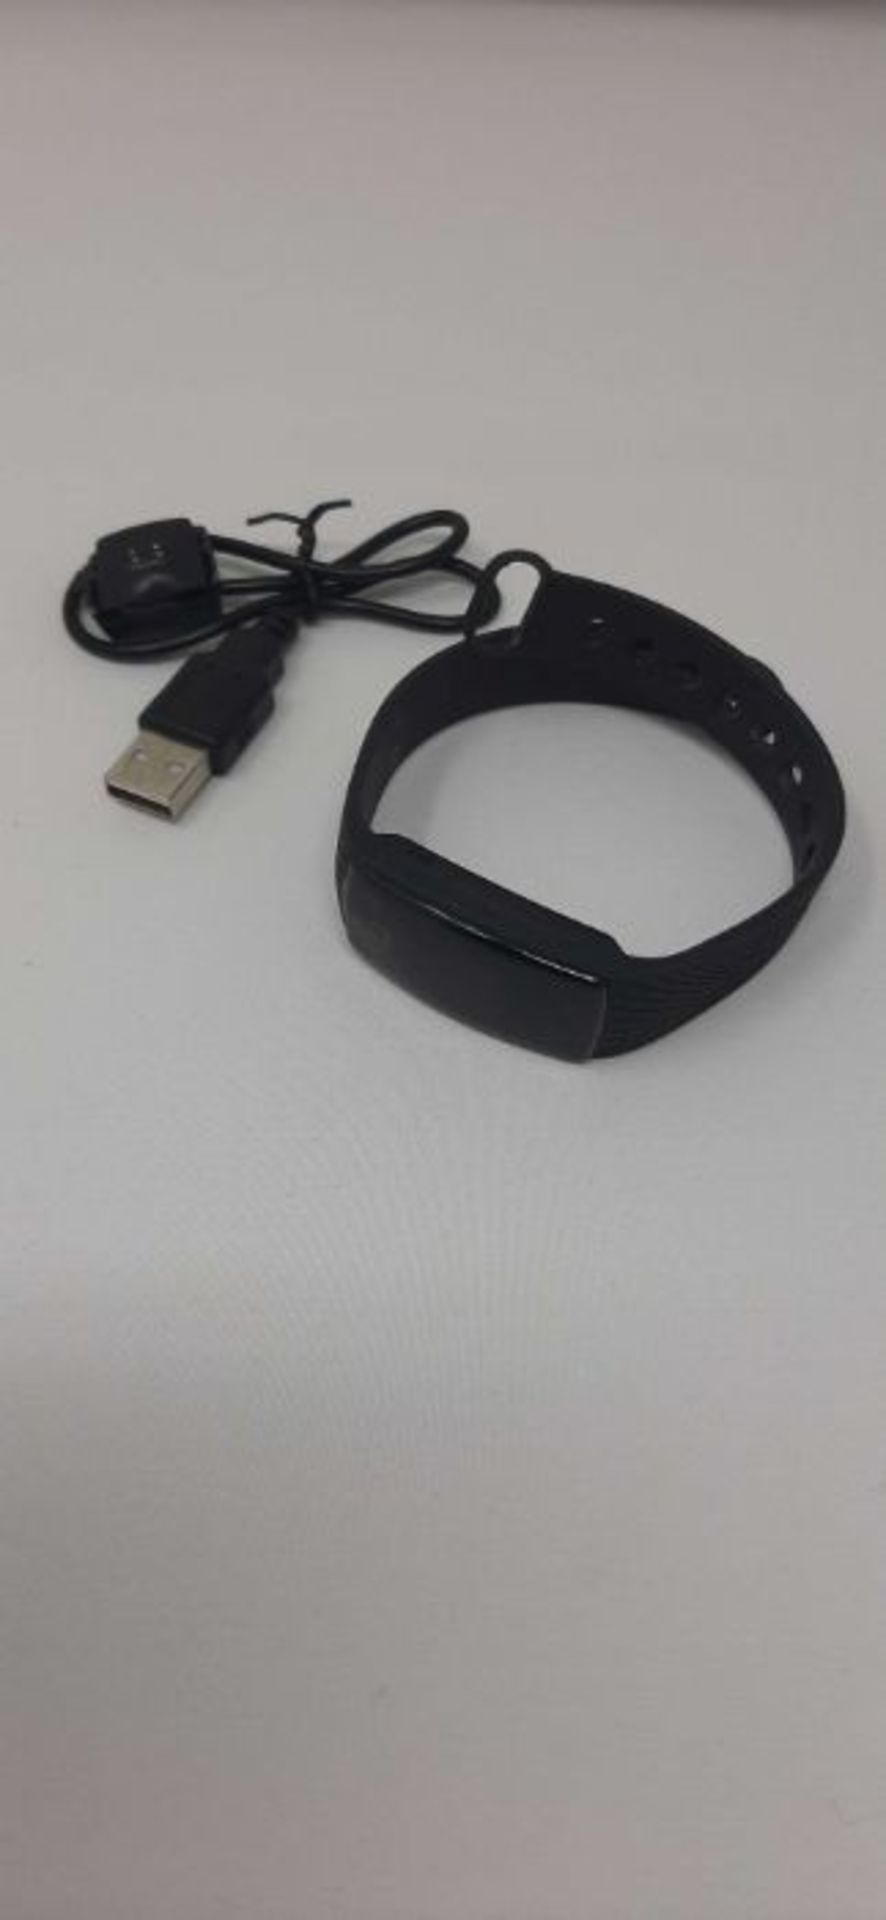 Fitness Tracker, AsiaLONG Heart Rate Monitor Smart Bracelet Activity Tracker Pedometer - Image 2 of 2